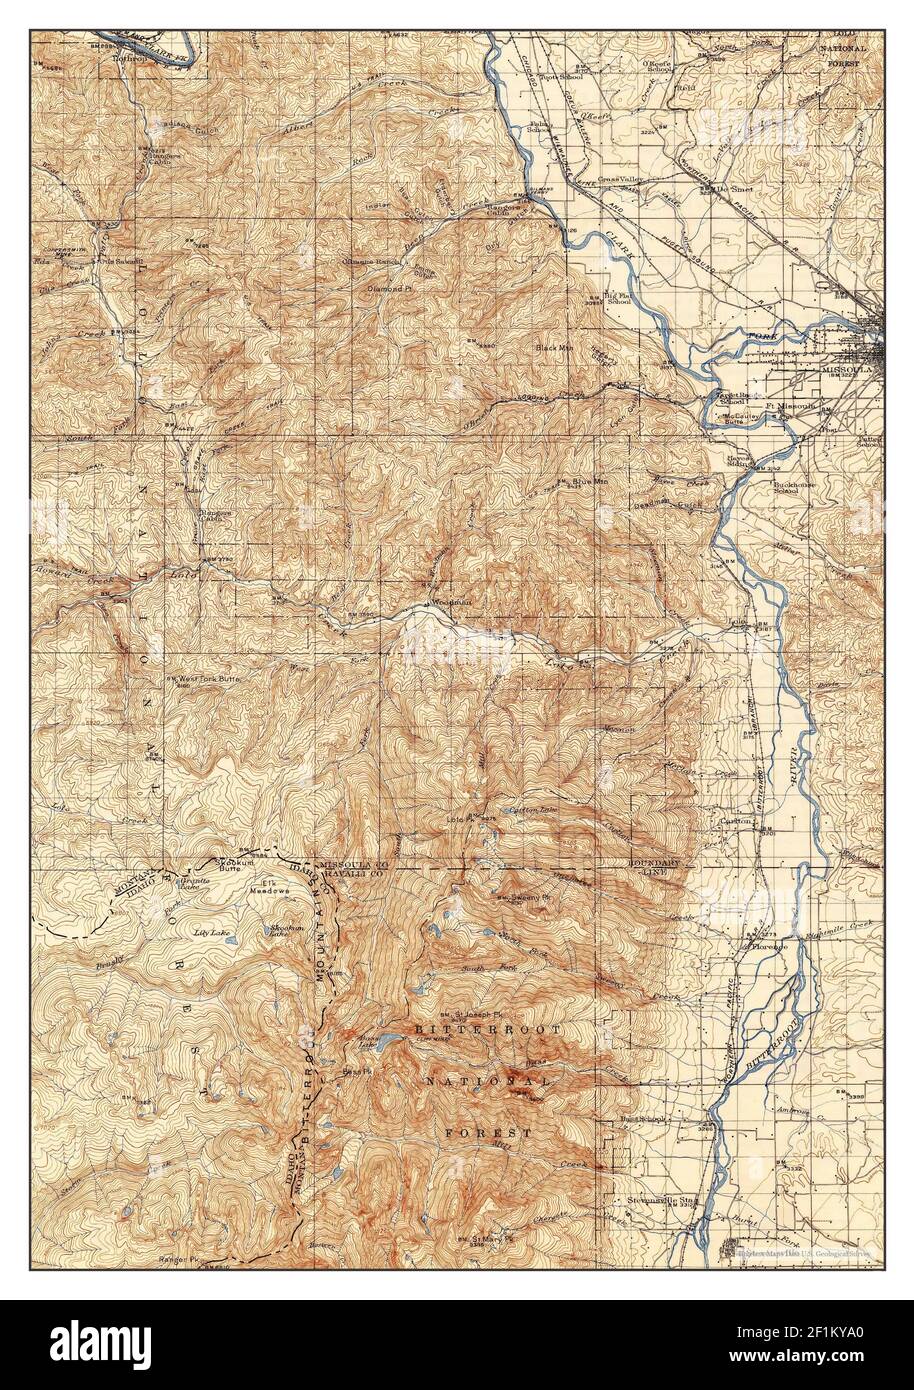 Missoula, Montana, map 1912, 1:125000, United States of America by Timeless Maps, data U.S. Geological Survey Stock Photo